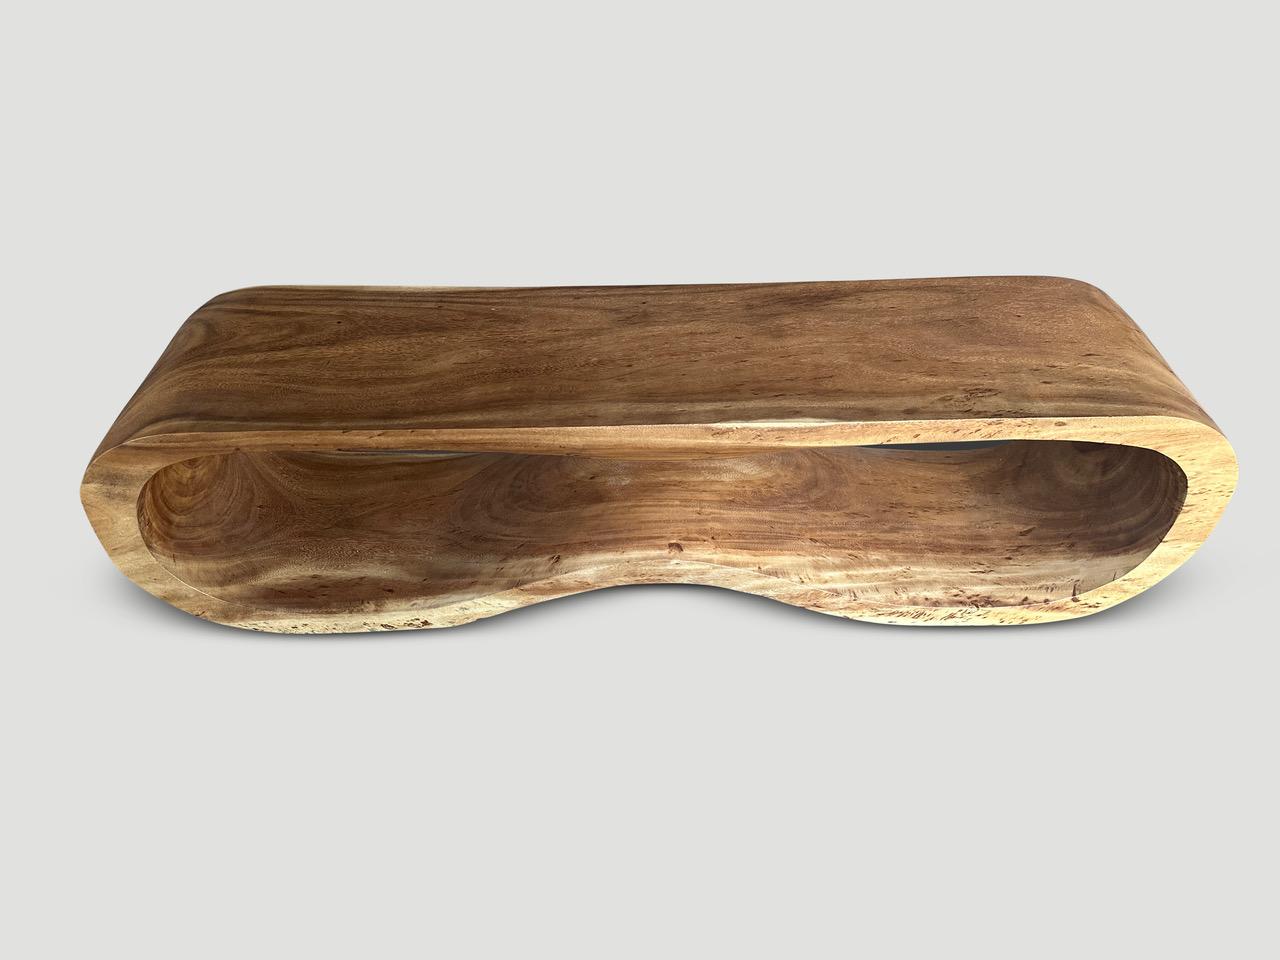 Organic Modern Andrianna Shamaris Minimalist Sculptural Suar Wood Bench or Coffee Table For Sale